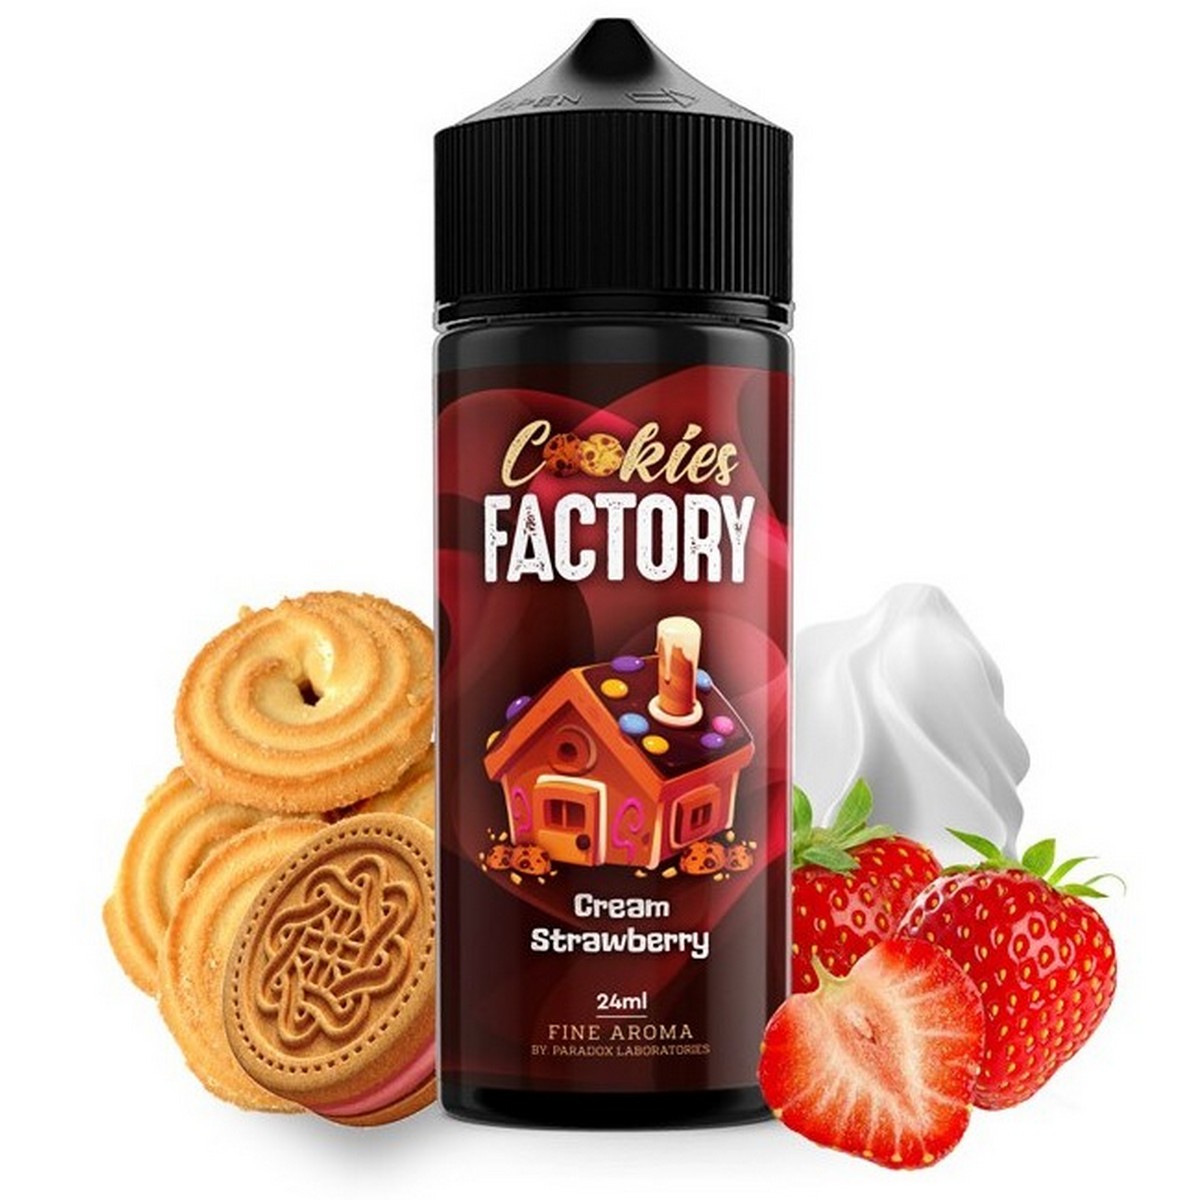 Cookies Factory Flavour Shot Cream Strawberry 24ml/120ml